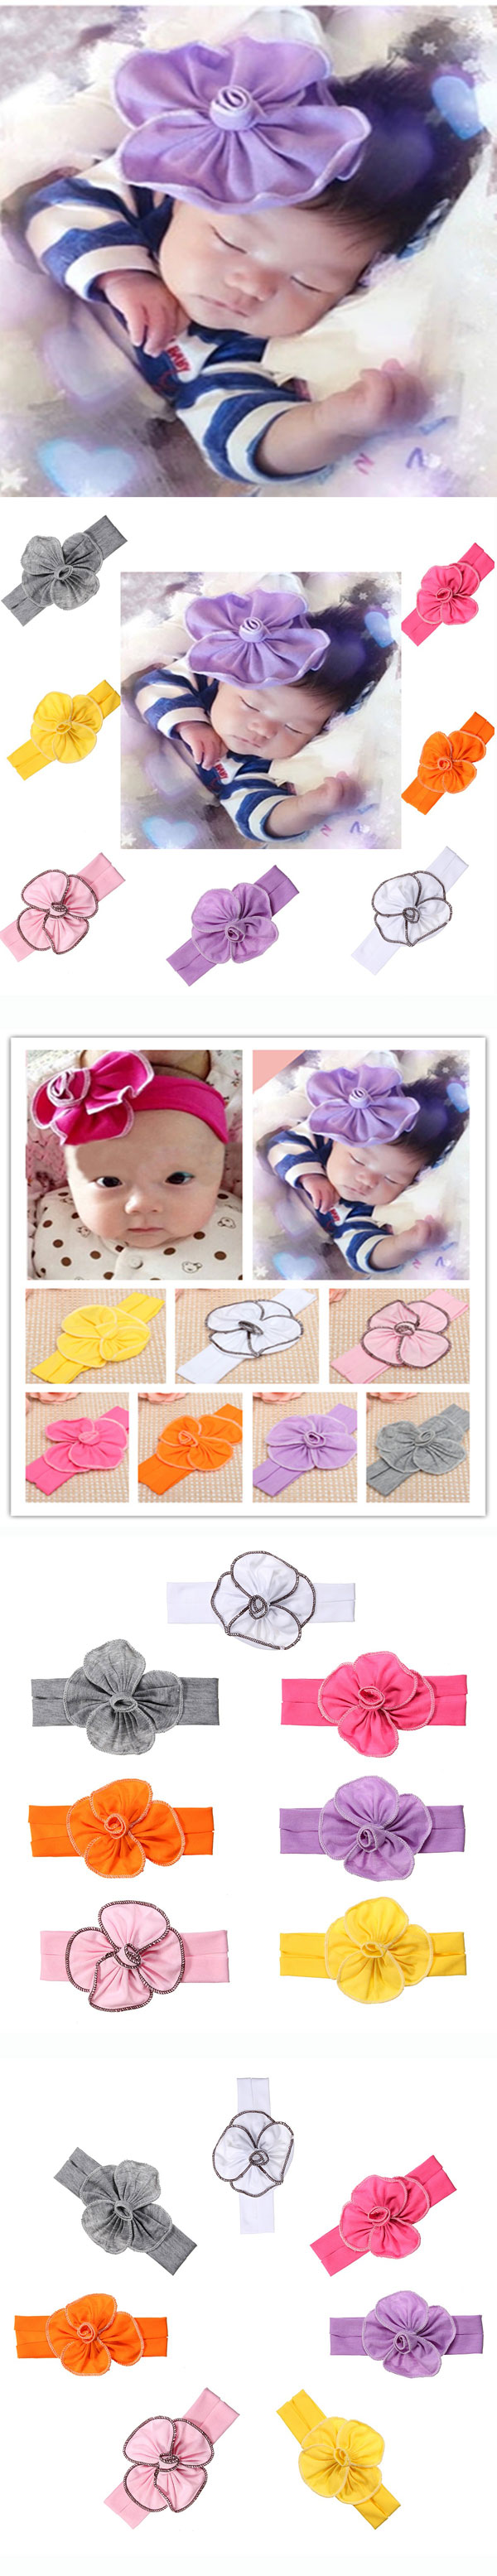 Baby-Flower-Hair-Head-Band-Kids-Girls-Toddler-Elastic-Headwear-Accessories-Hot-1009403